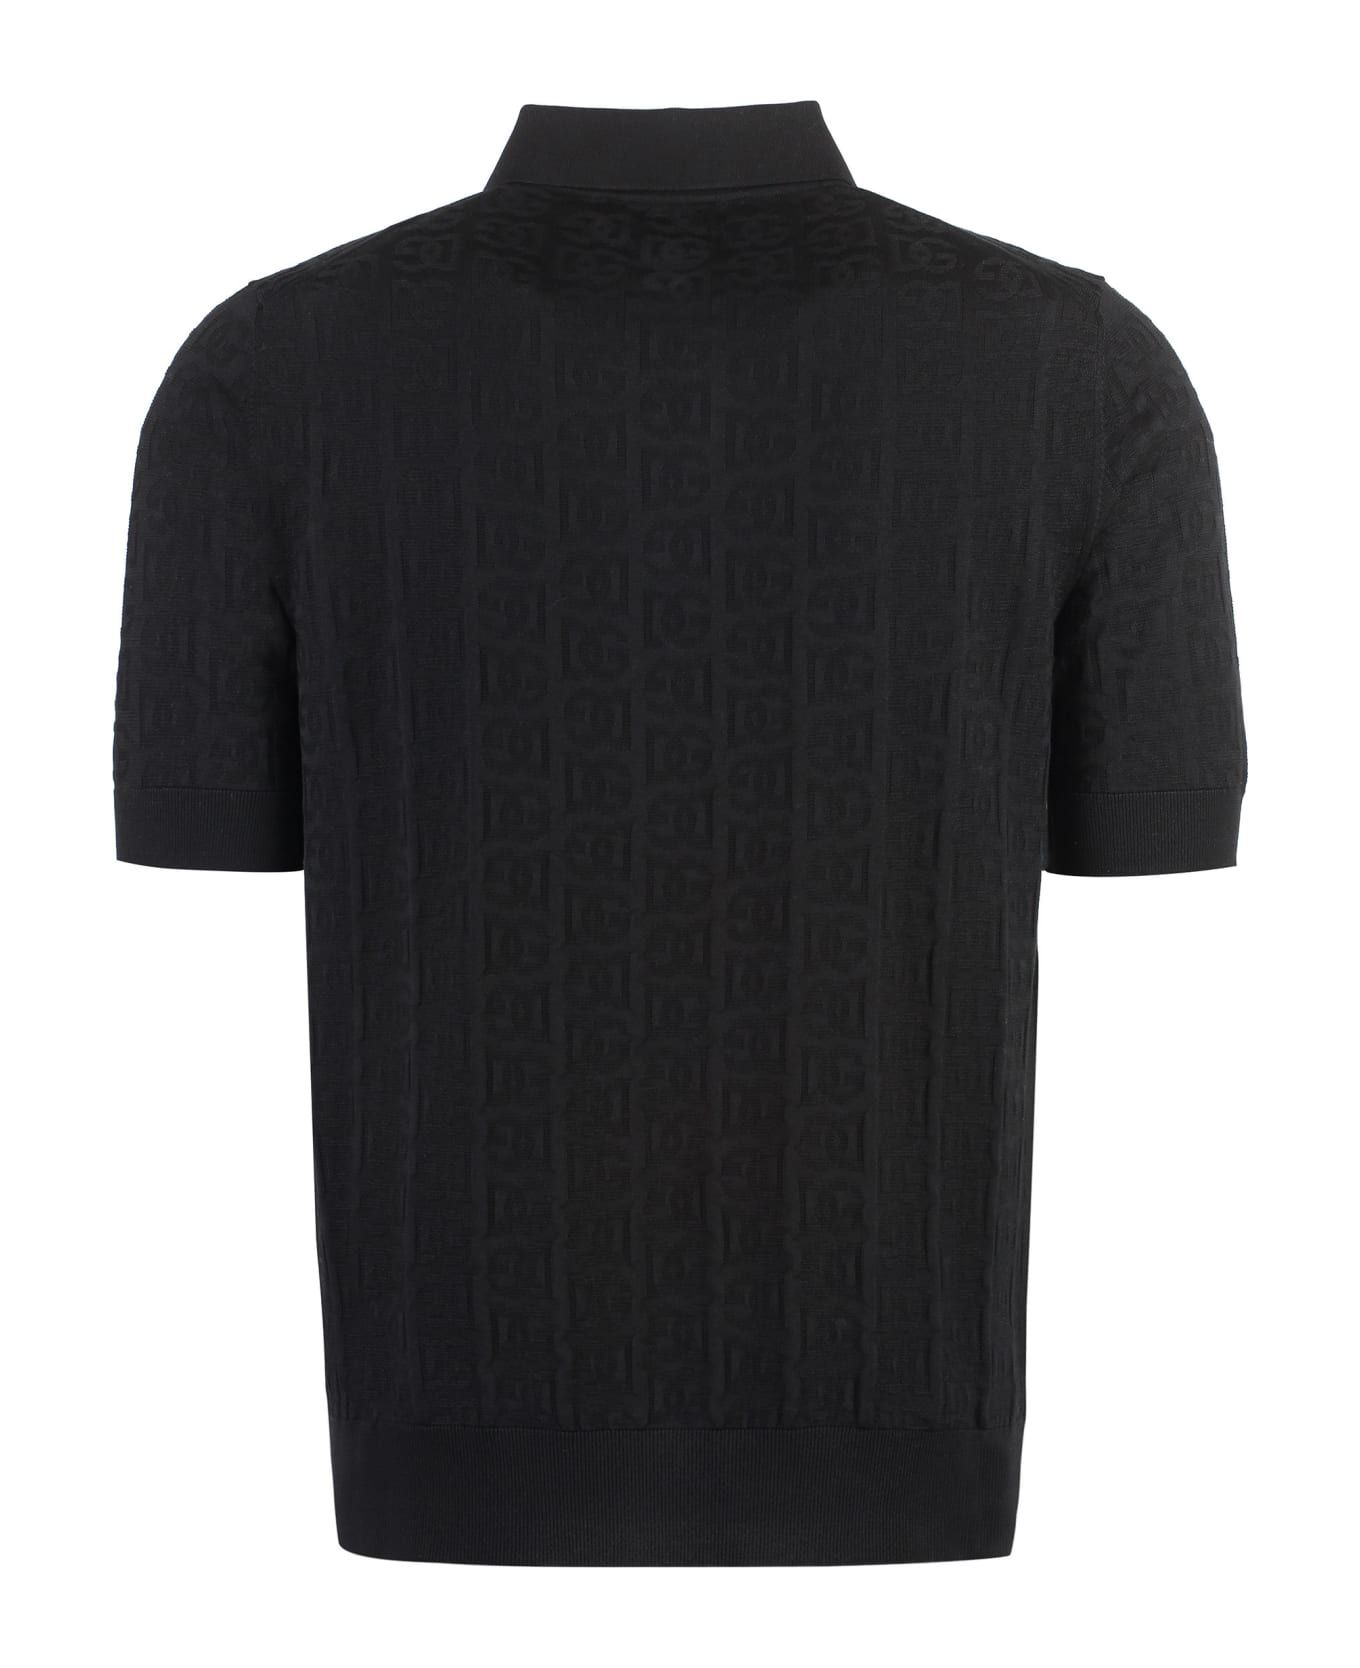 Dolce & Gabbana Jacquard Knit Polo Shirt - black シャツ